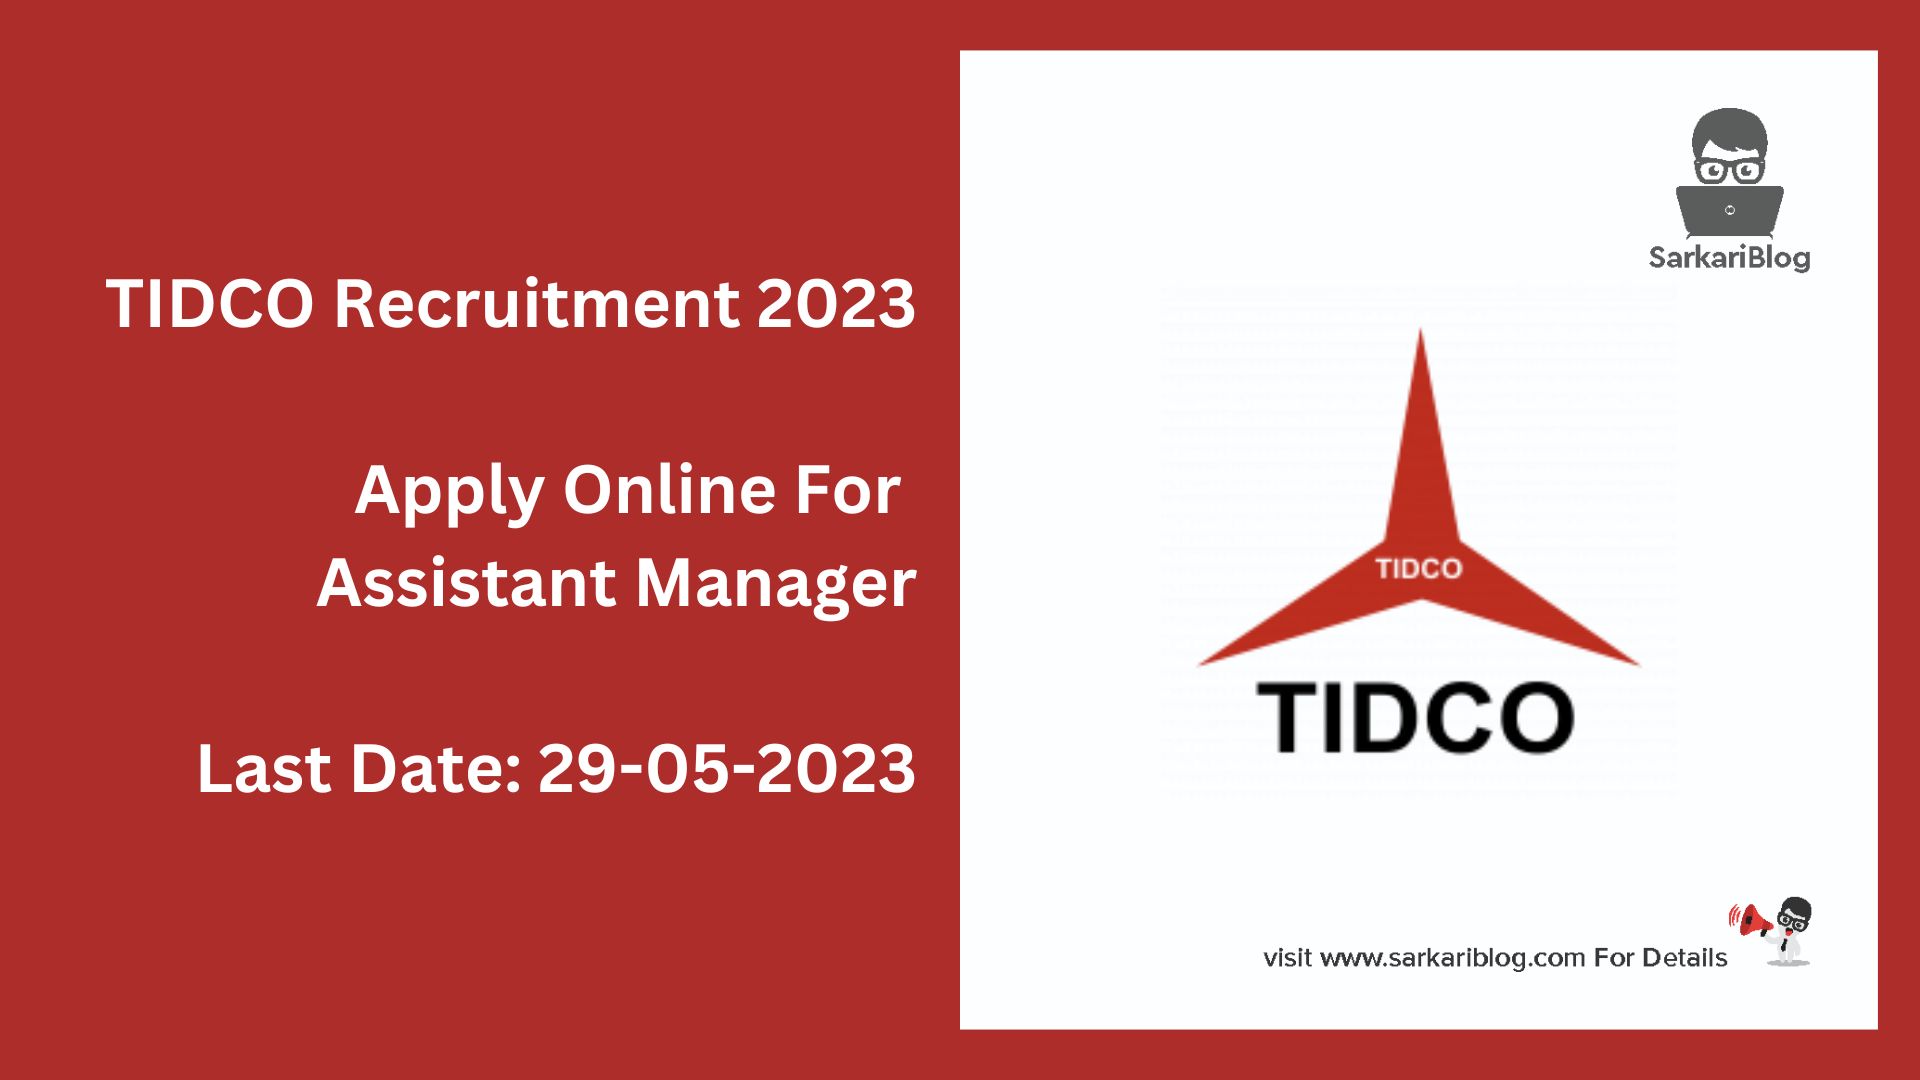 TIDCO Recruitment 2023